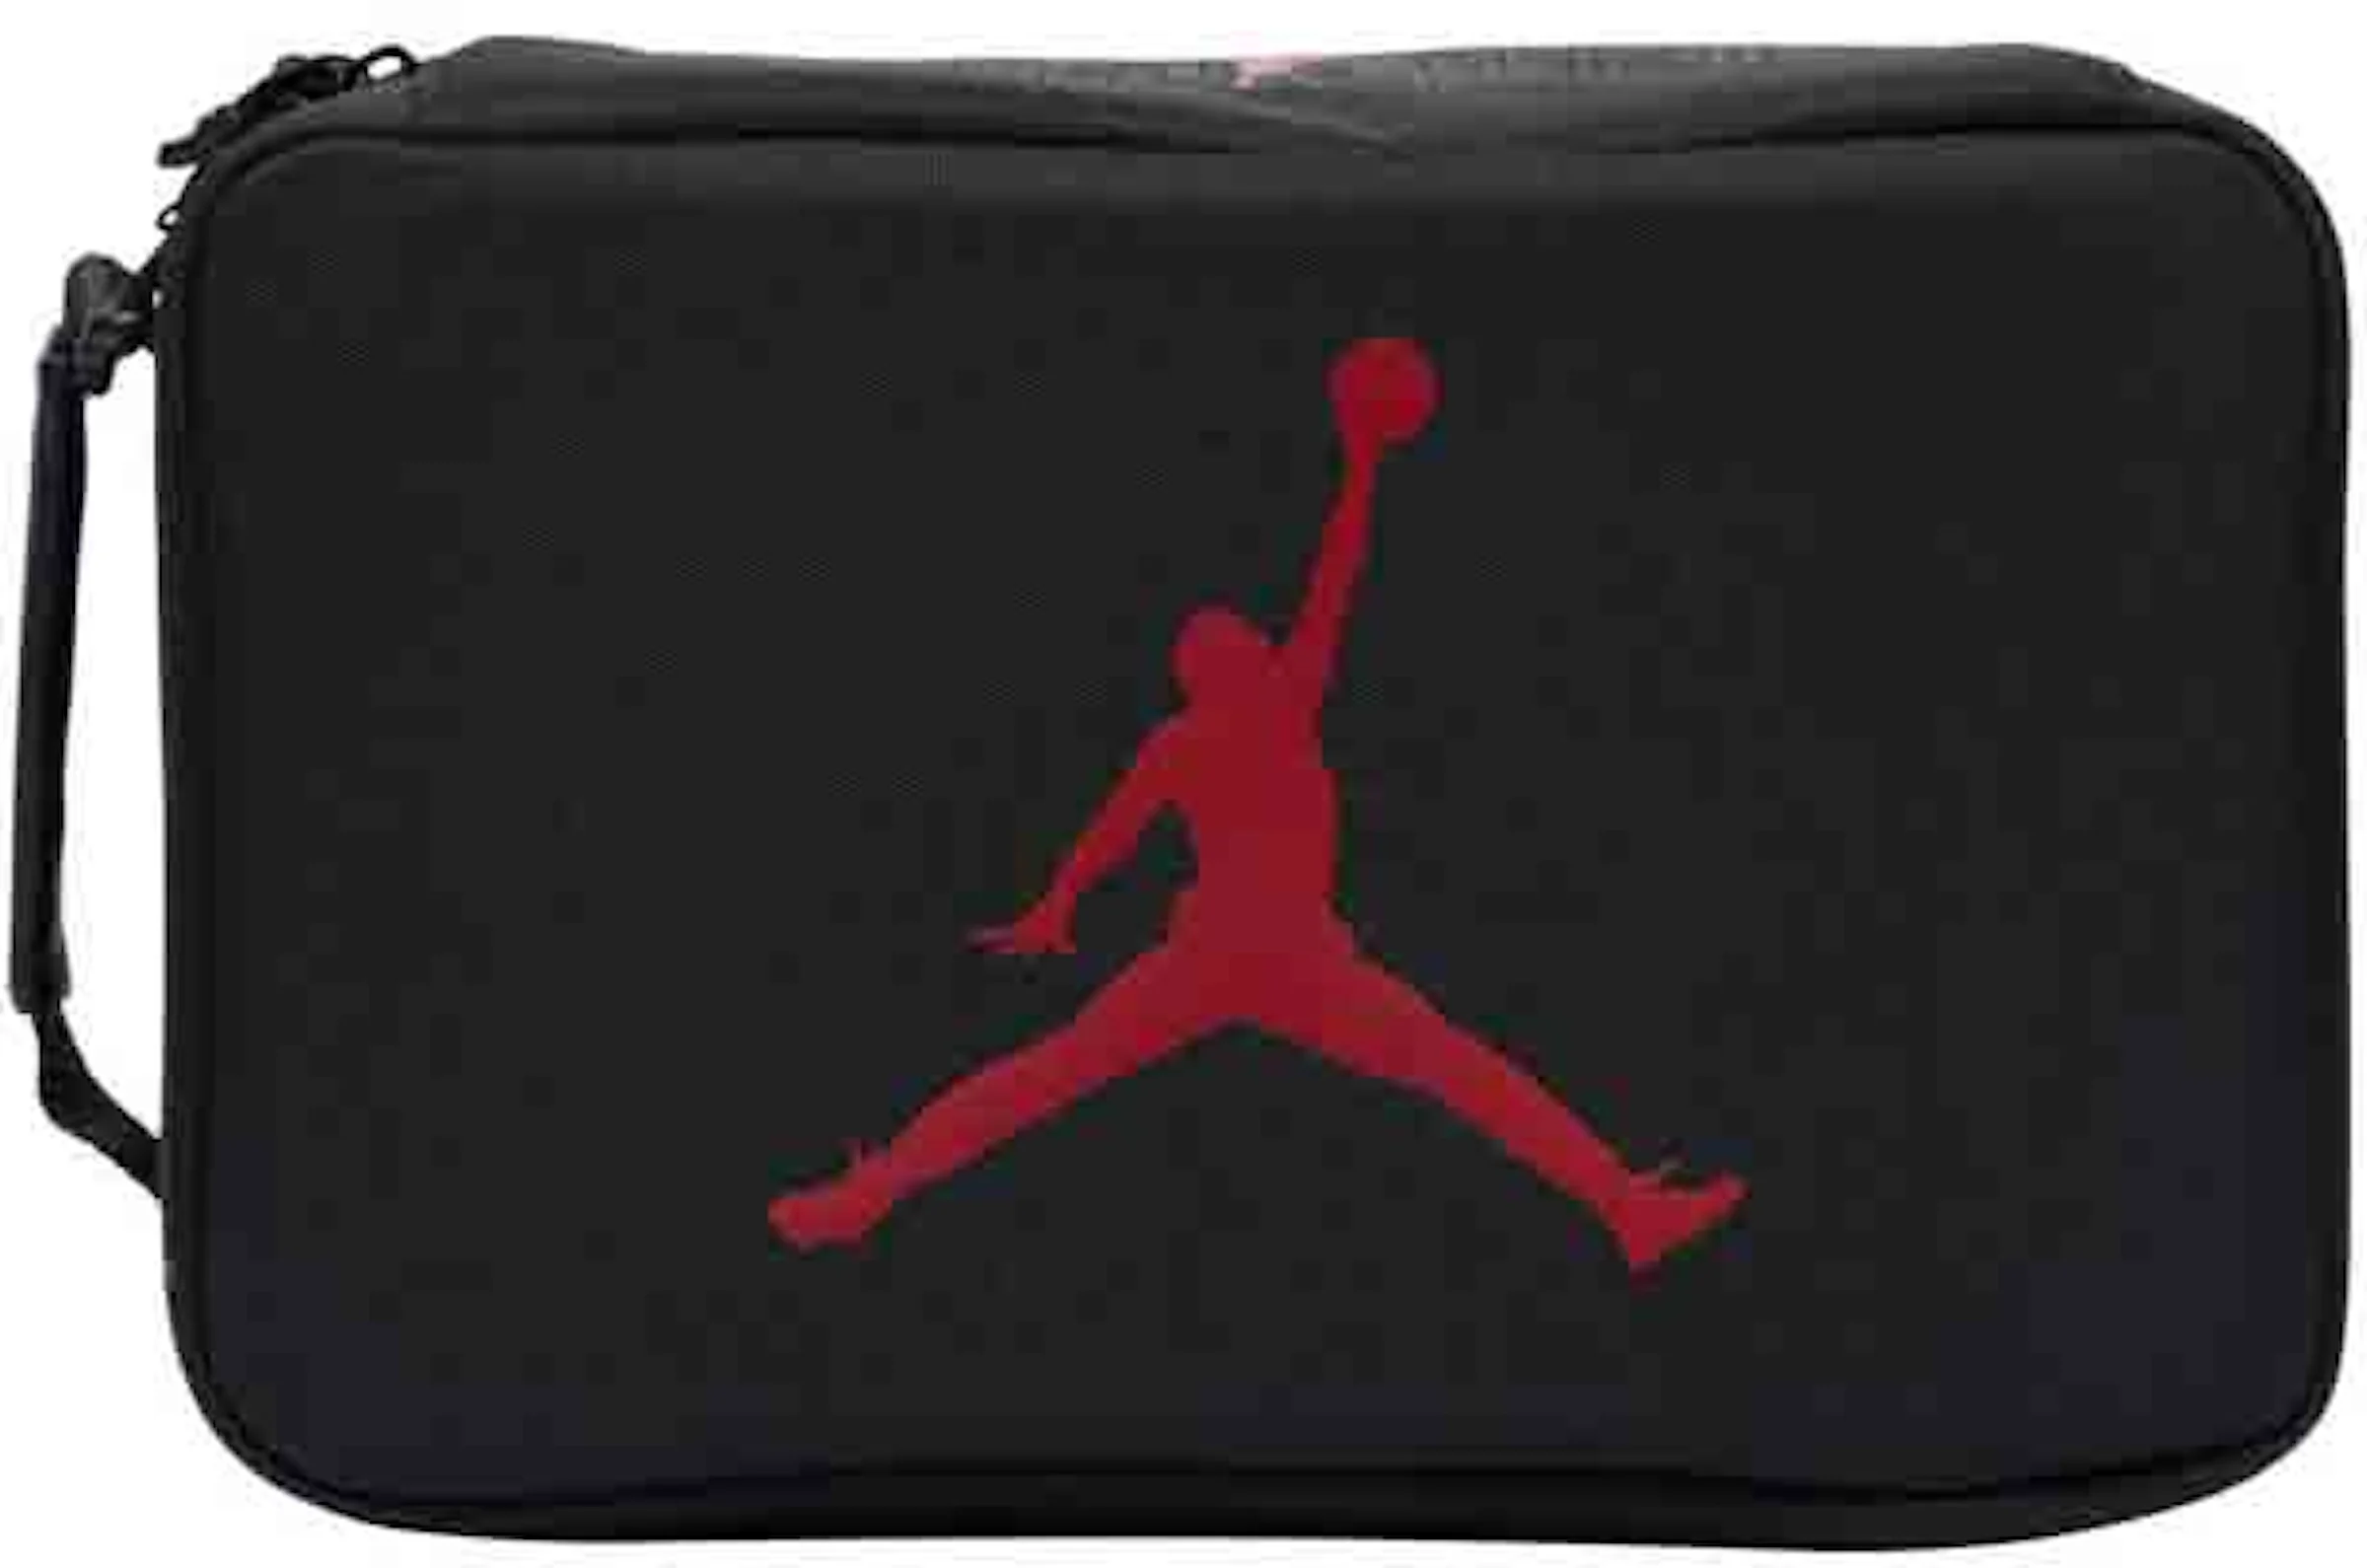 Jordan Shoe Box